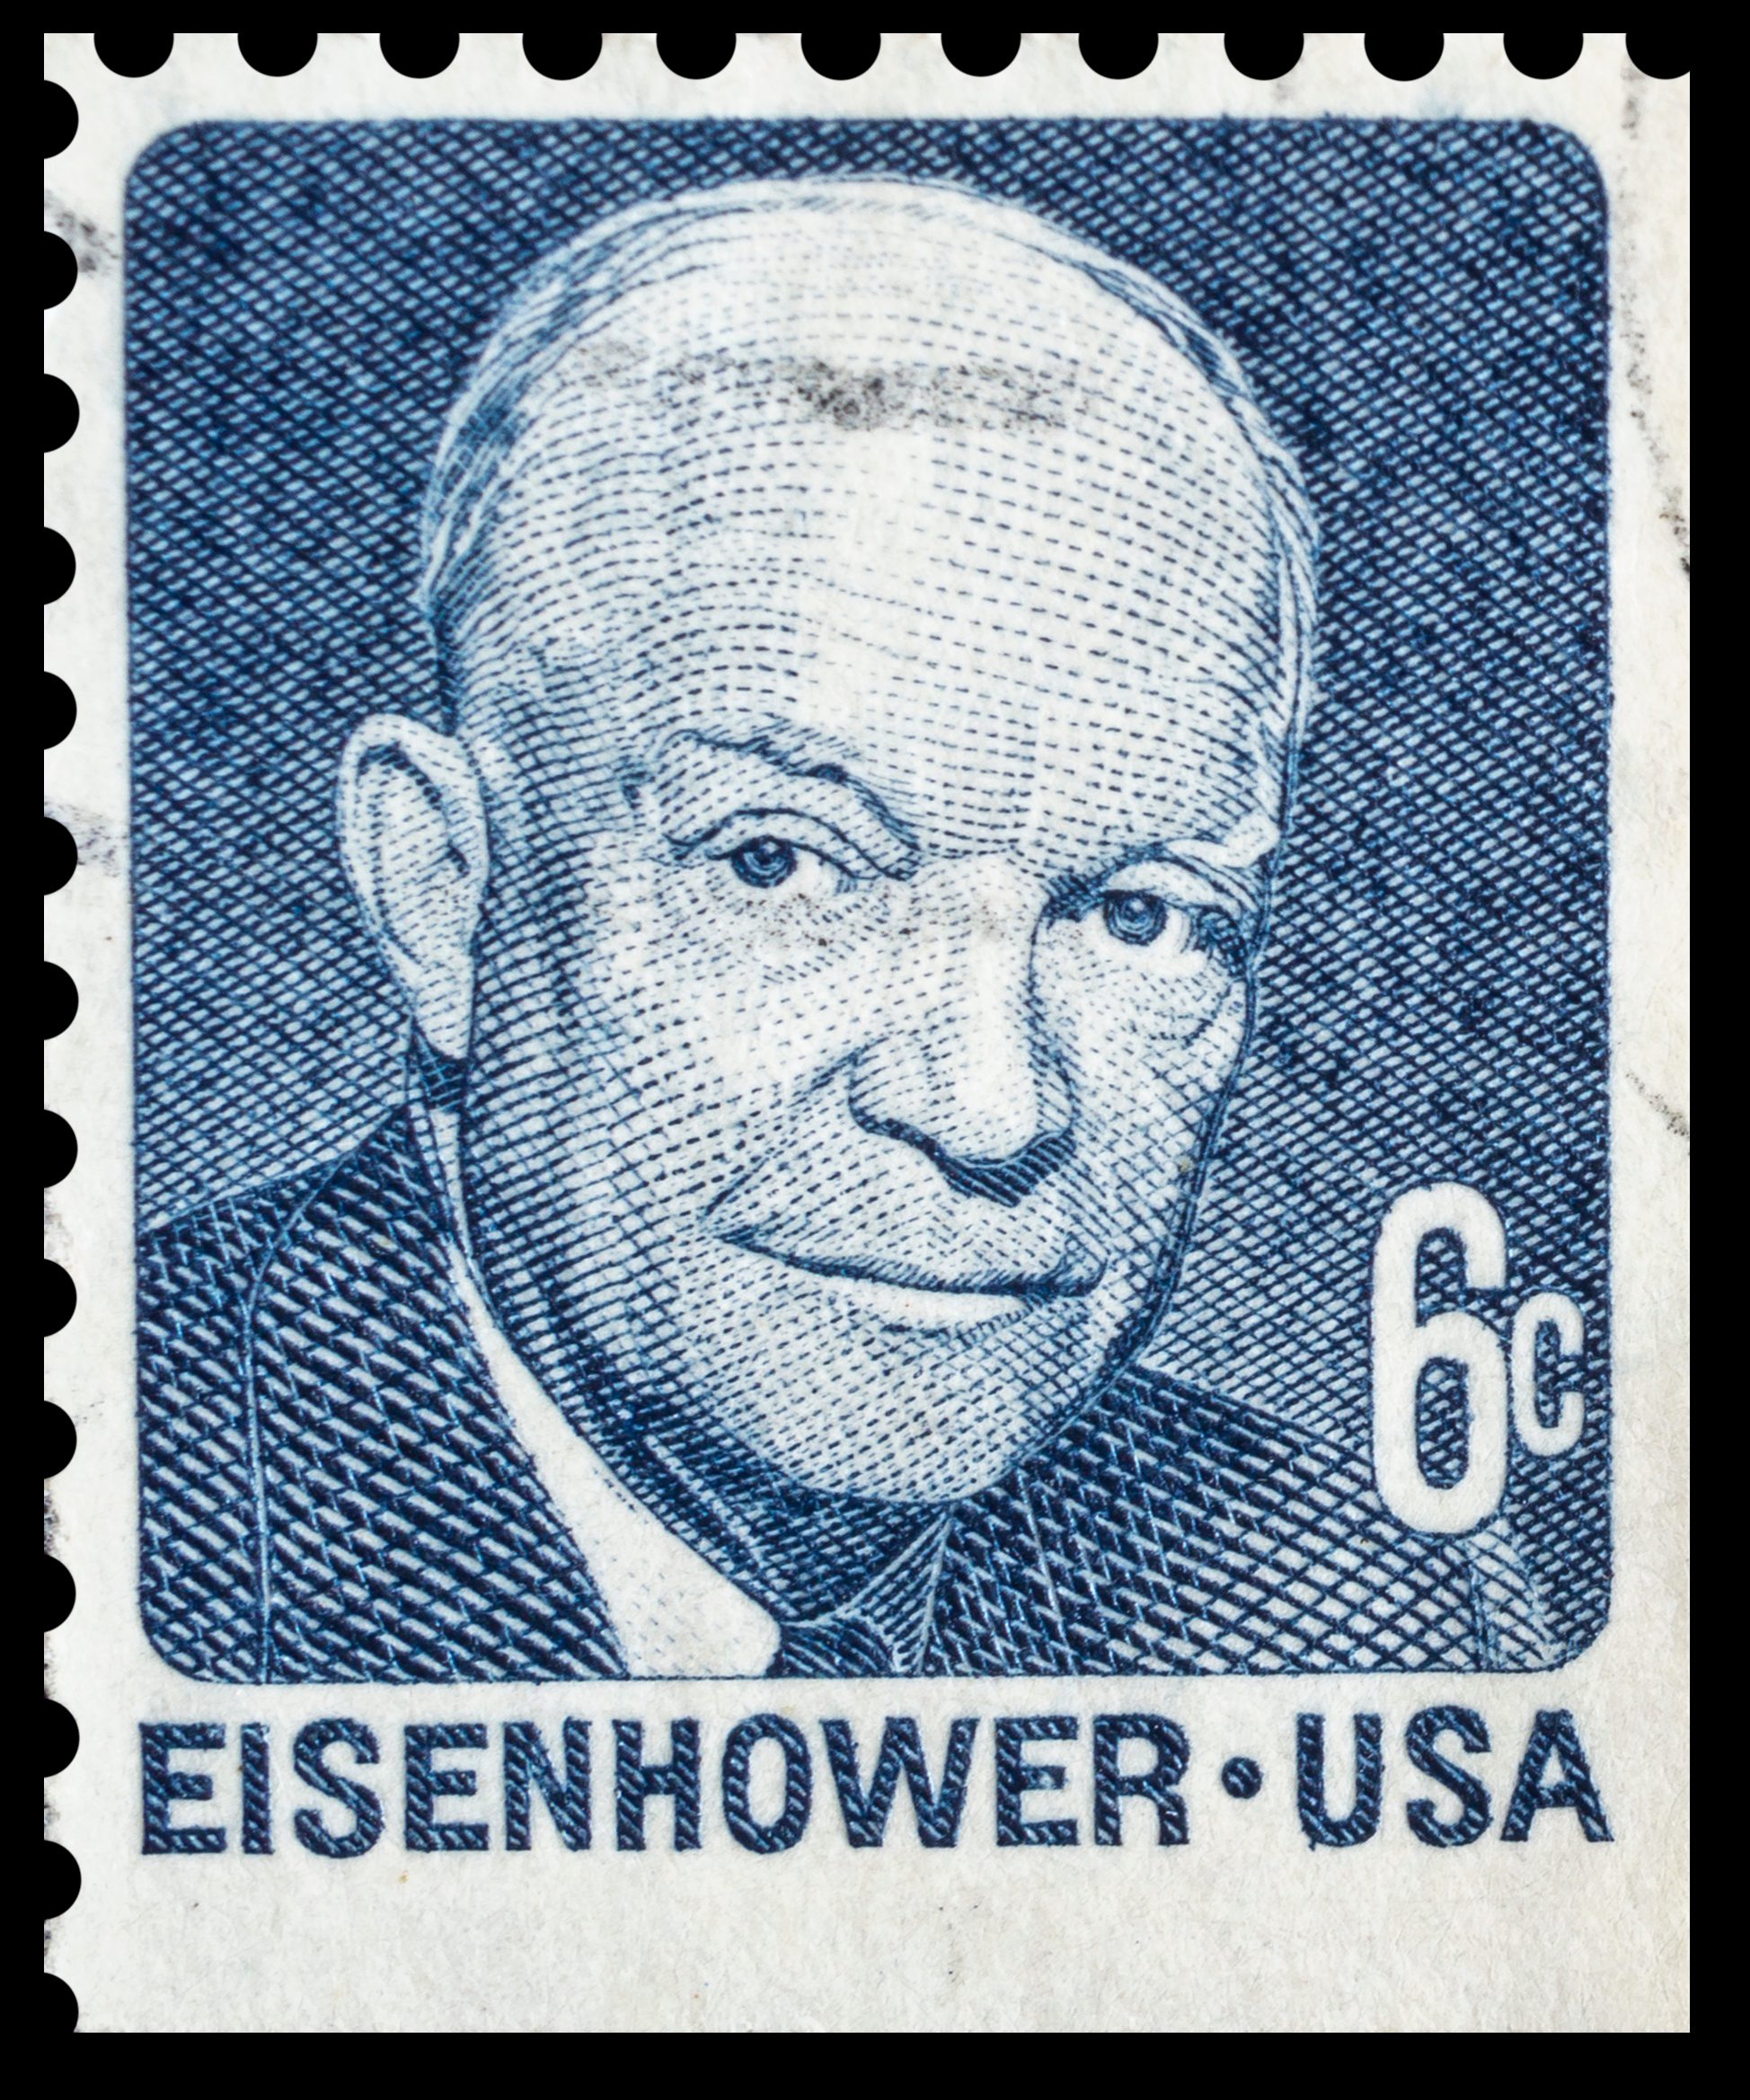 Eisenhower’s Farewell Address at 60